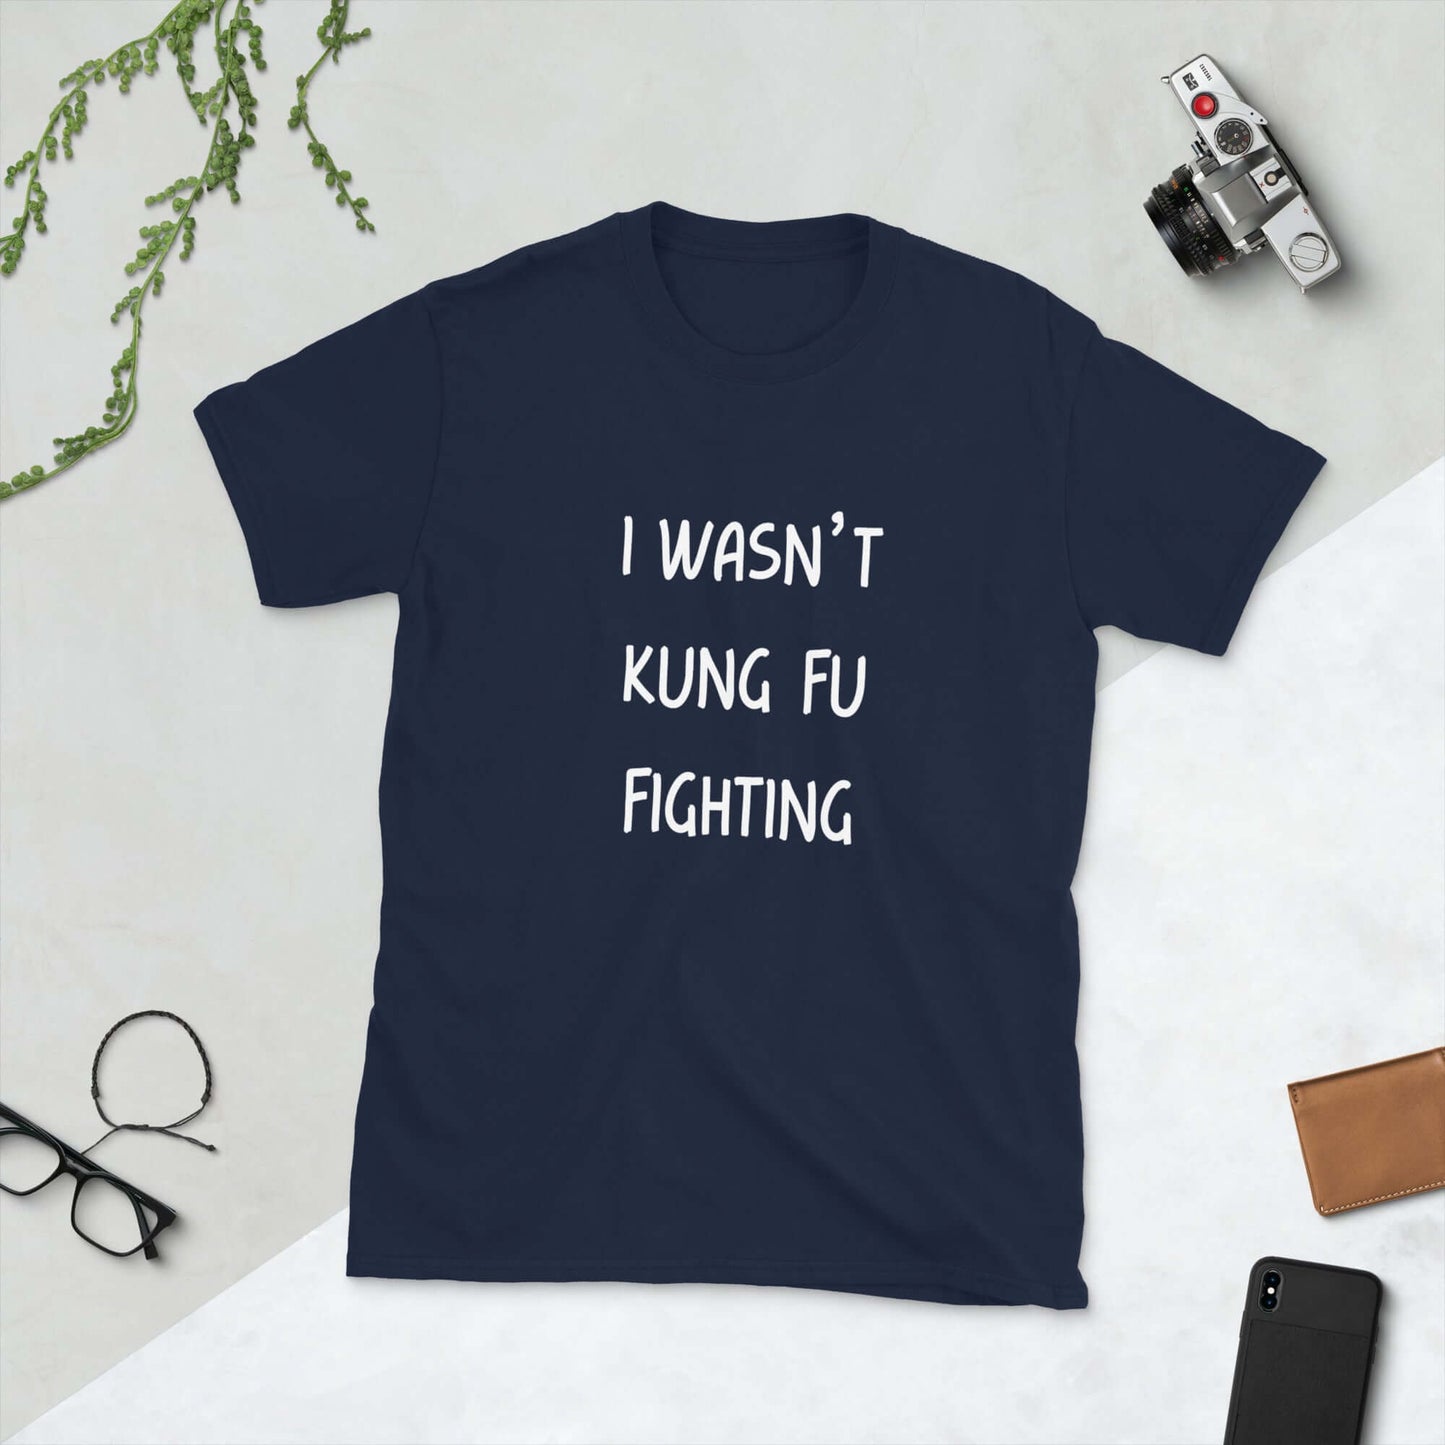 Funny kung fu fighting joke t-shirt